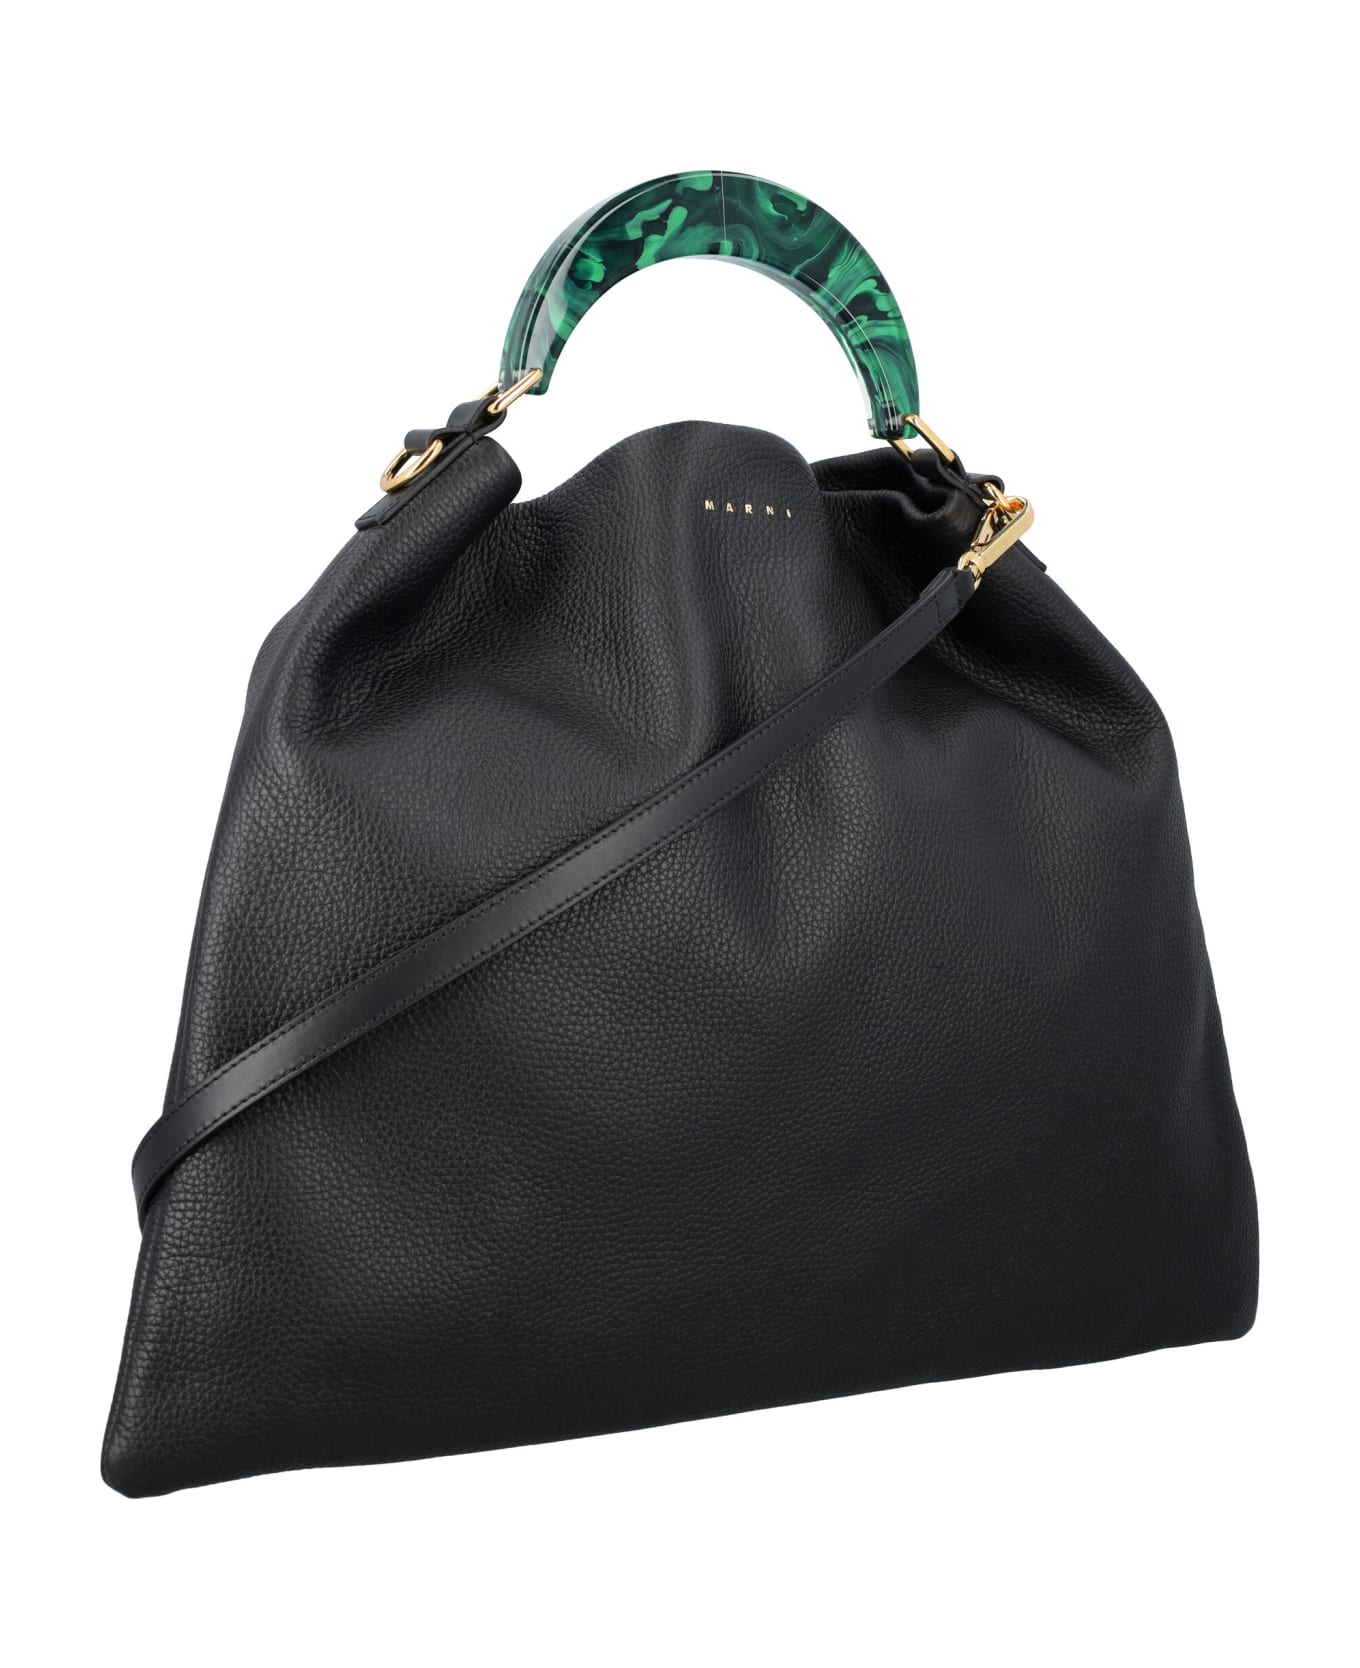 Marni Small 'venice' Black Leather Bag - Black